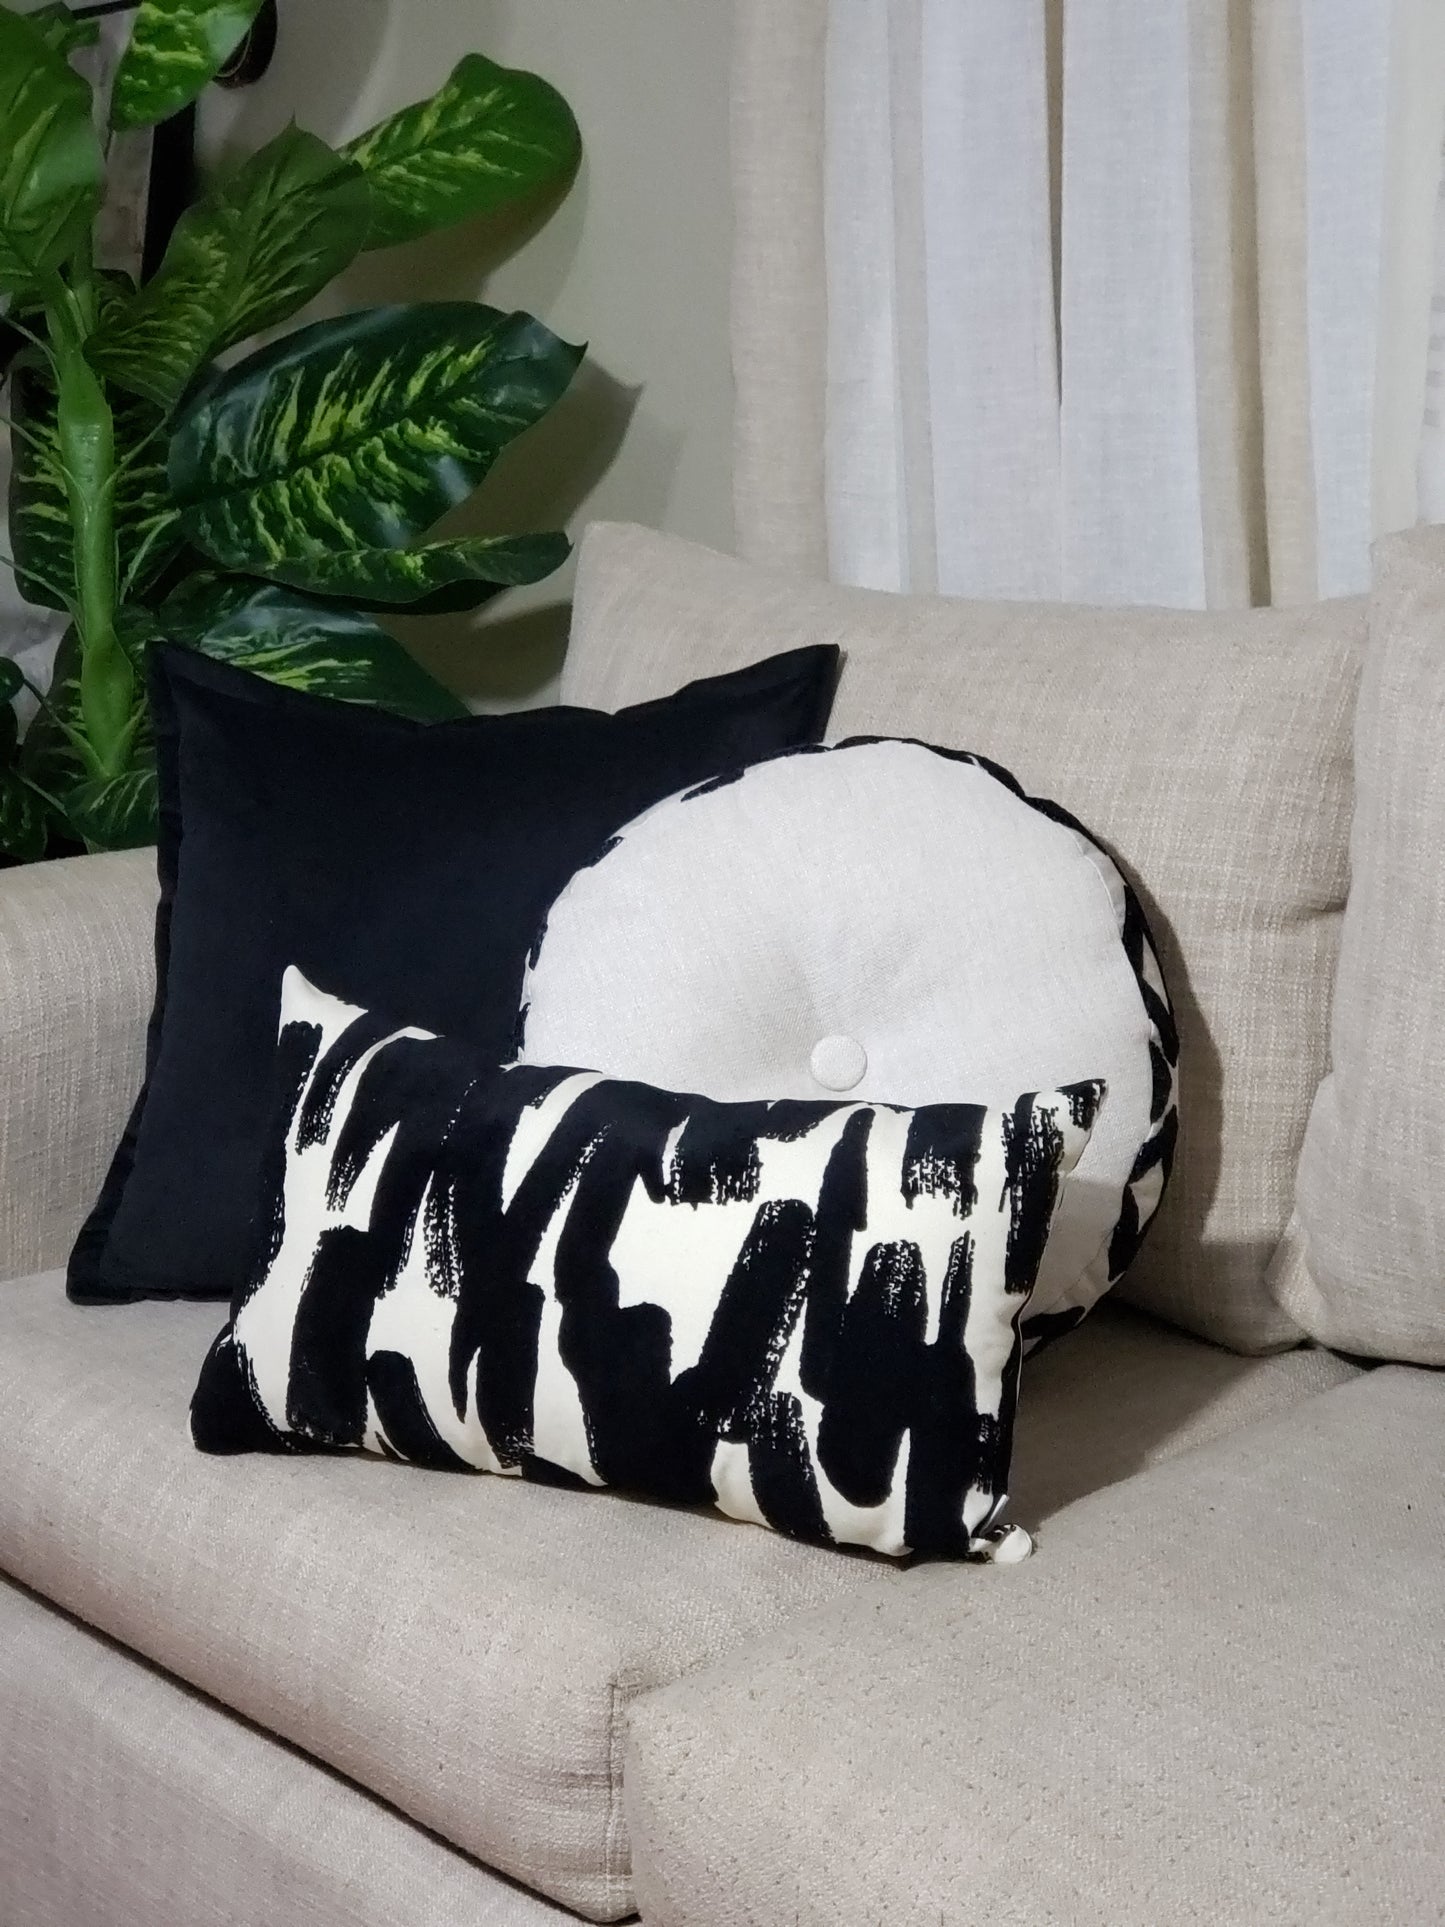 Janaya Opulent Strokes Black and White Designer Decorative Pillow Covers